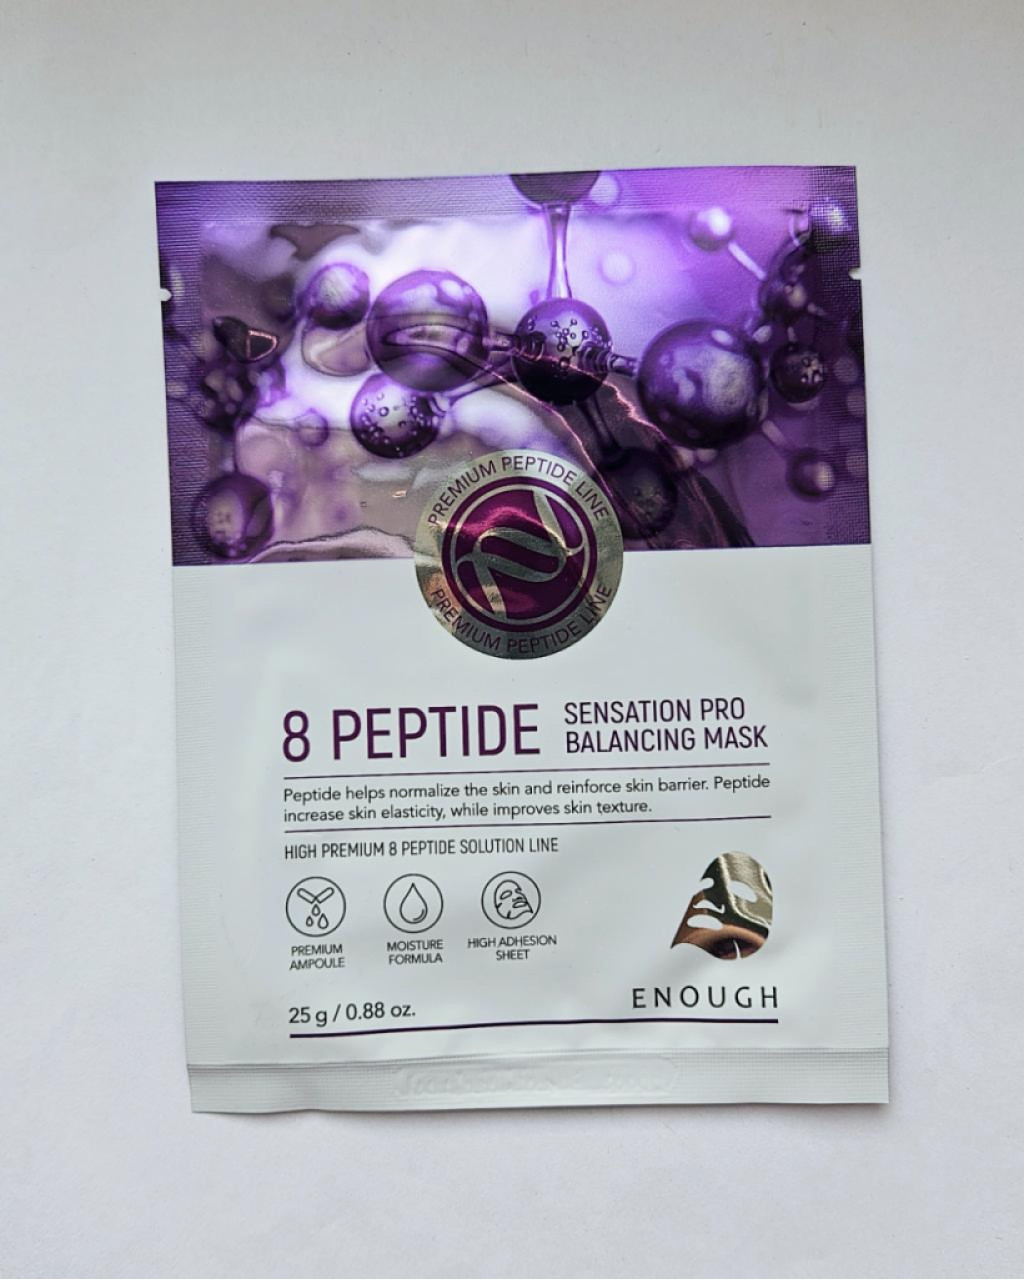 Enough 8 Peptide Sensation Pro Balancing Mask Тканевая маска с пептидами